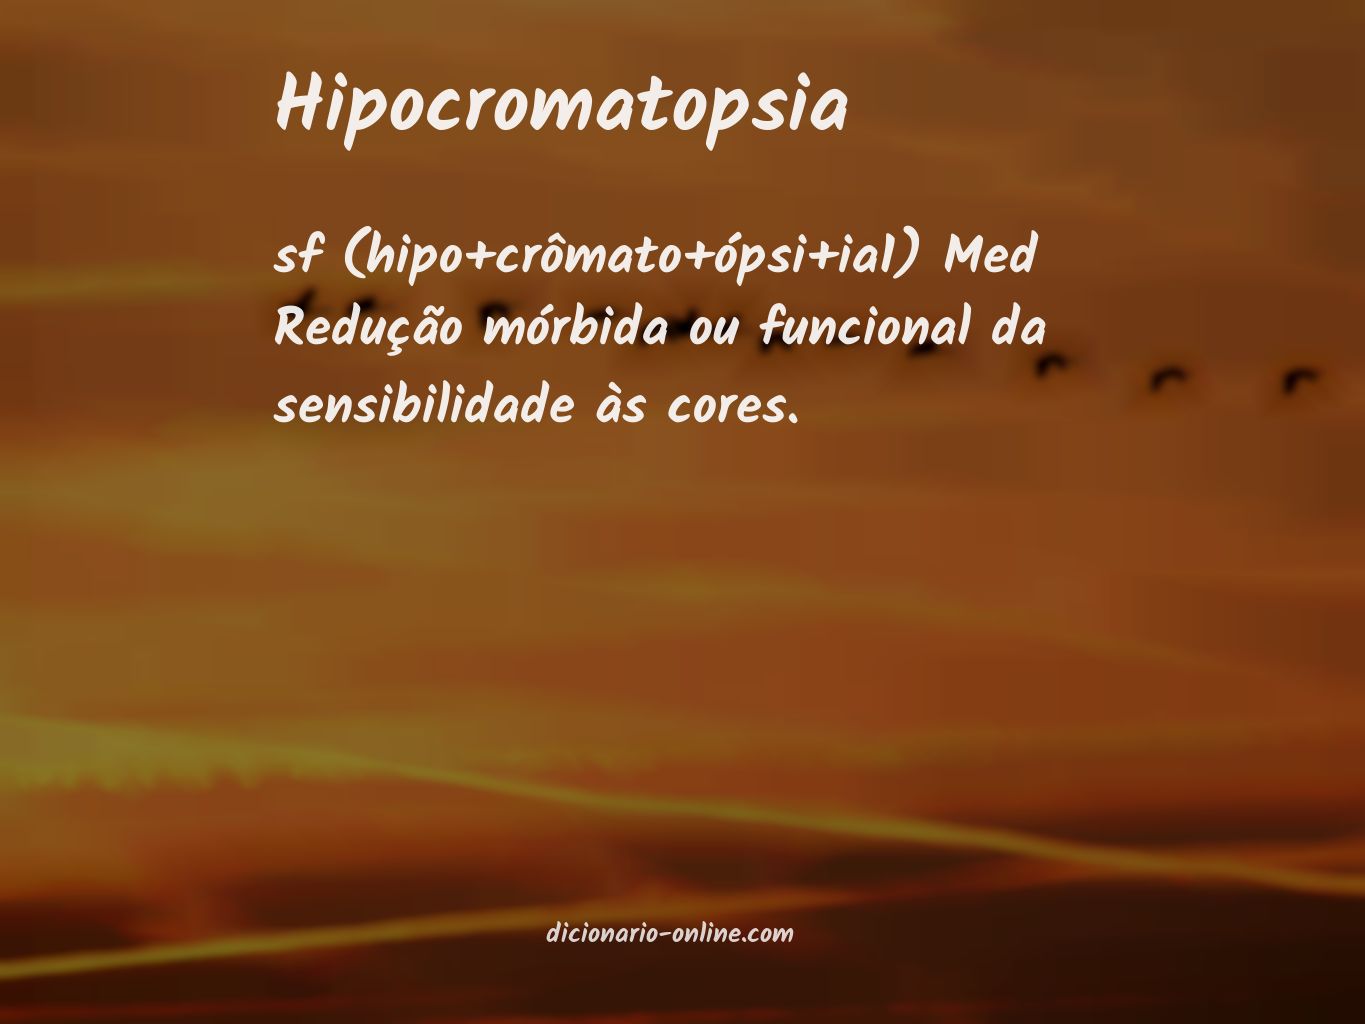 Significado de hipocromatopsia